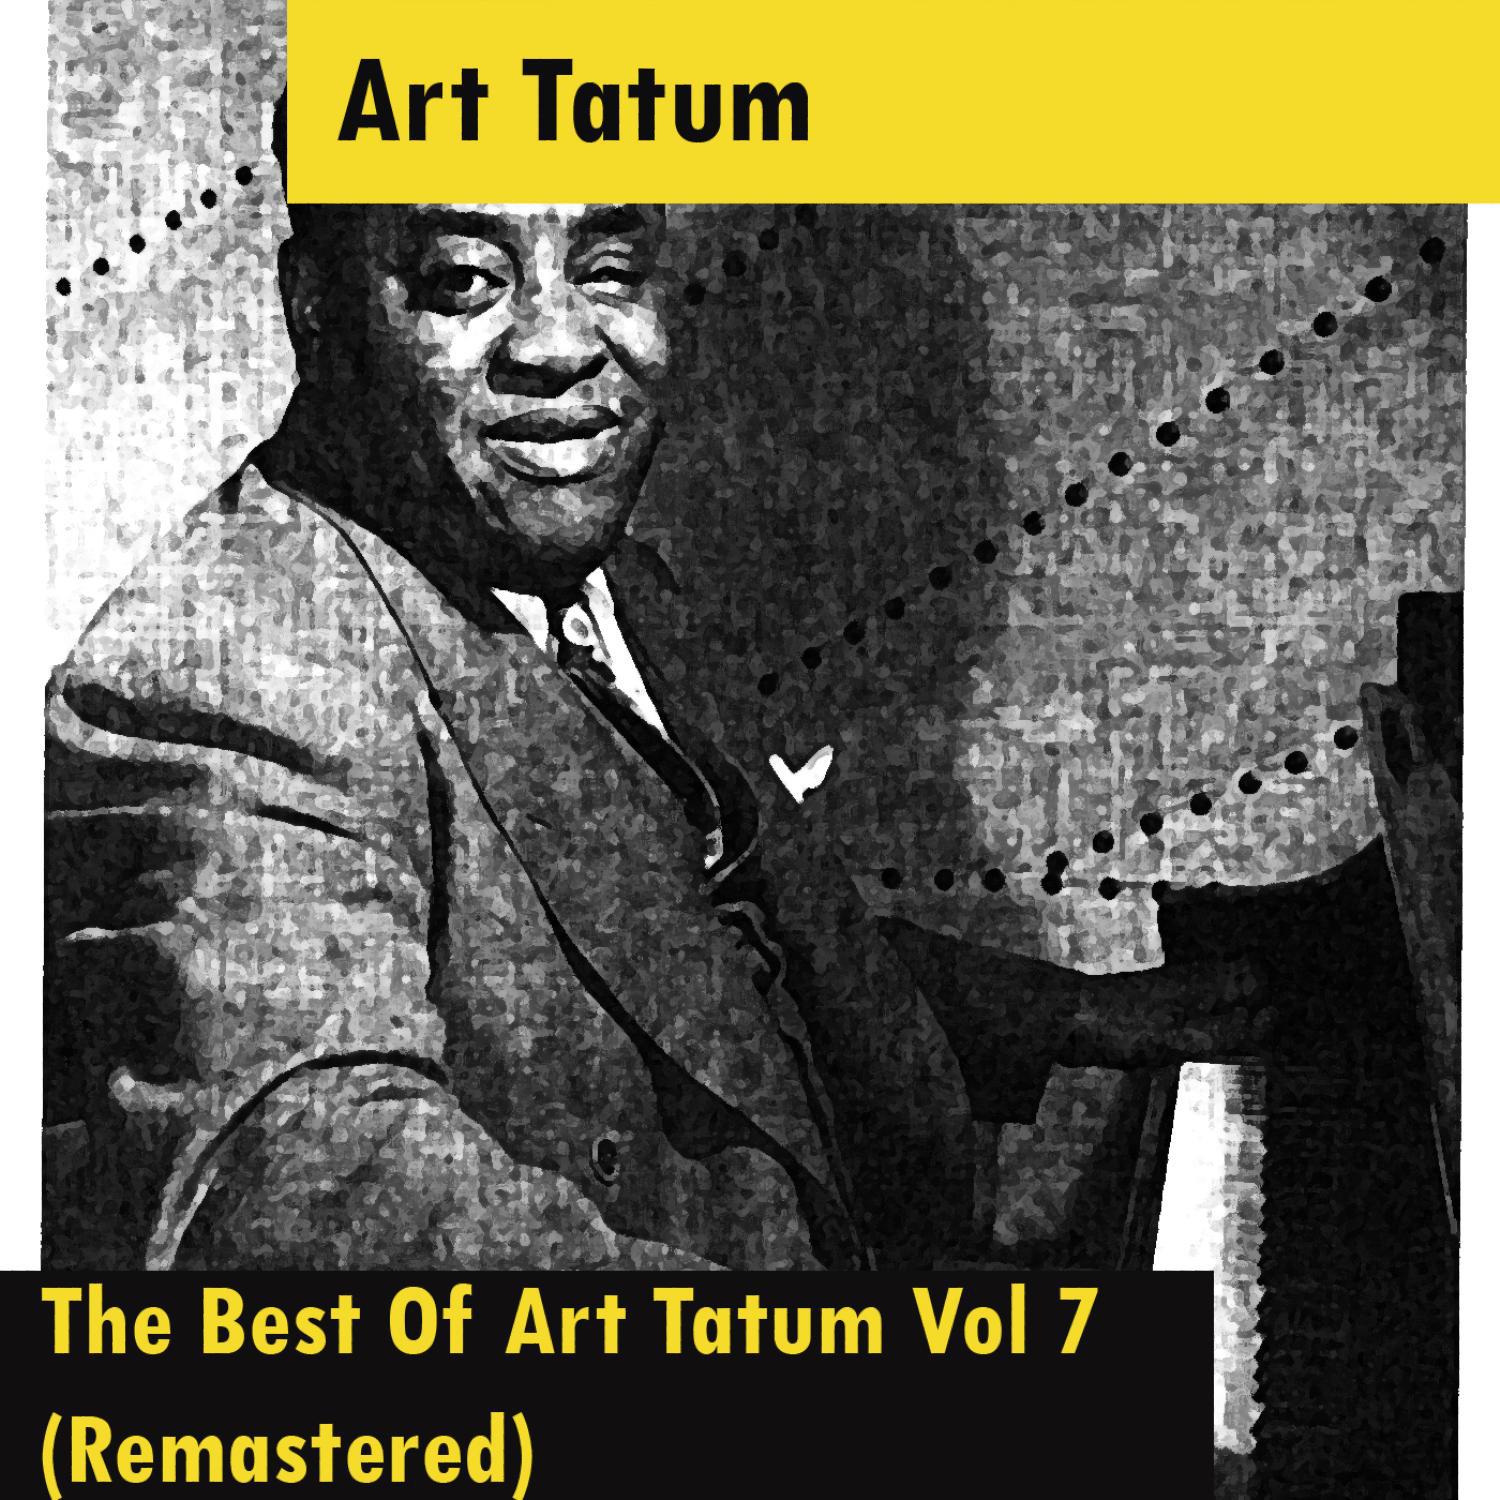 The Best Of Art Tatum Vol 7 (Remastered)